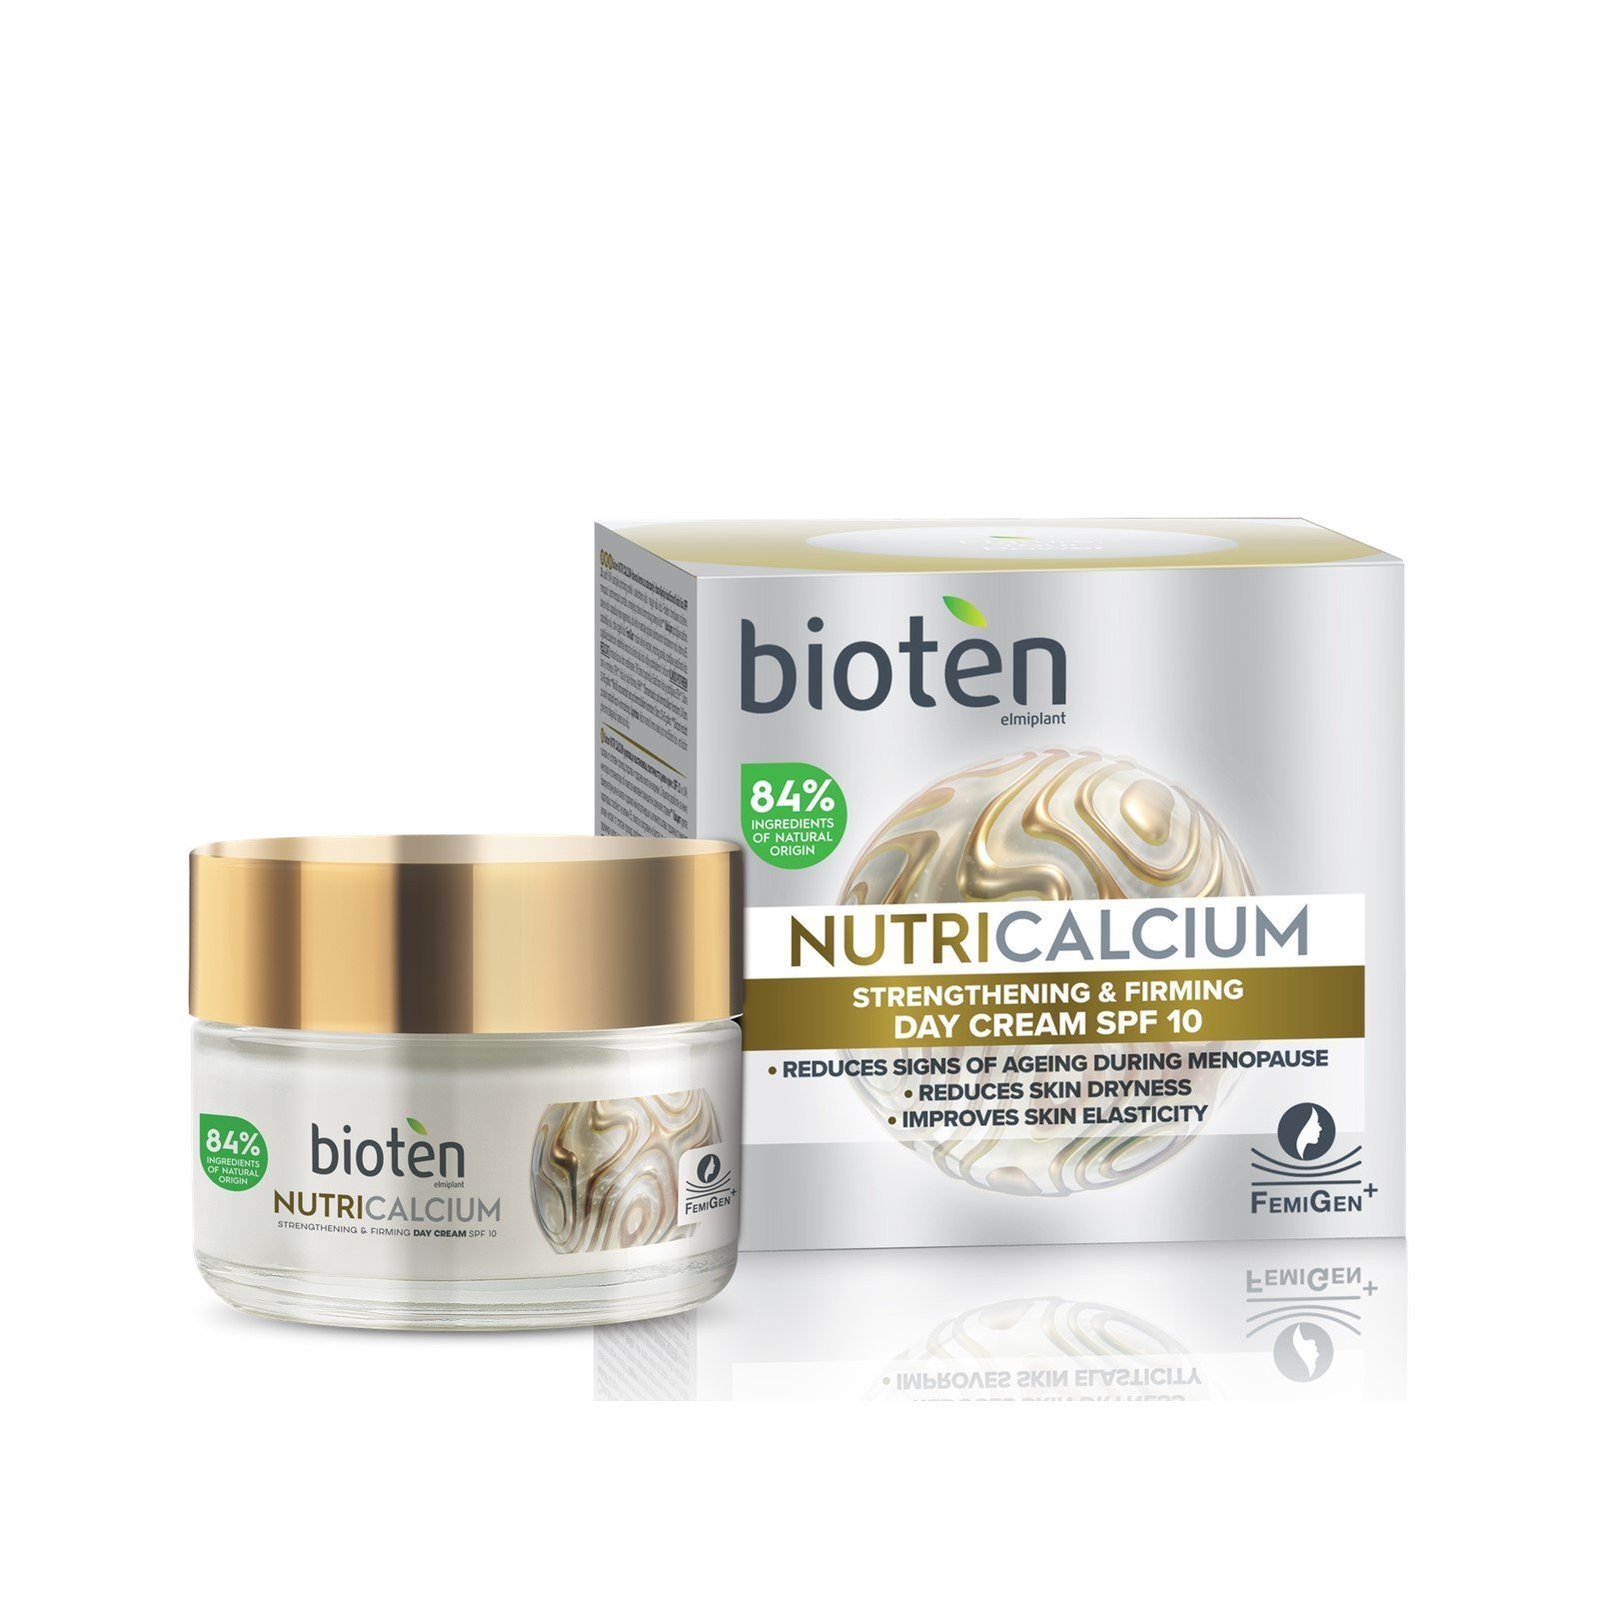 bioten Nutricalcium Strengthening & Firming Day Cream SPF10 50ml